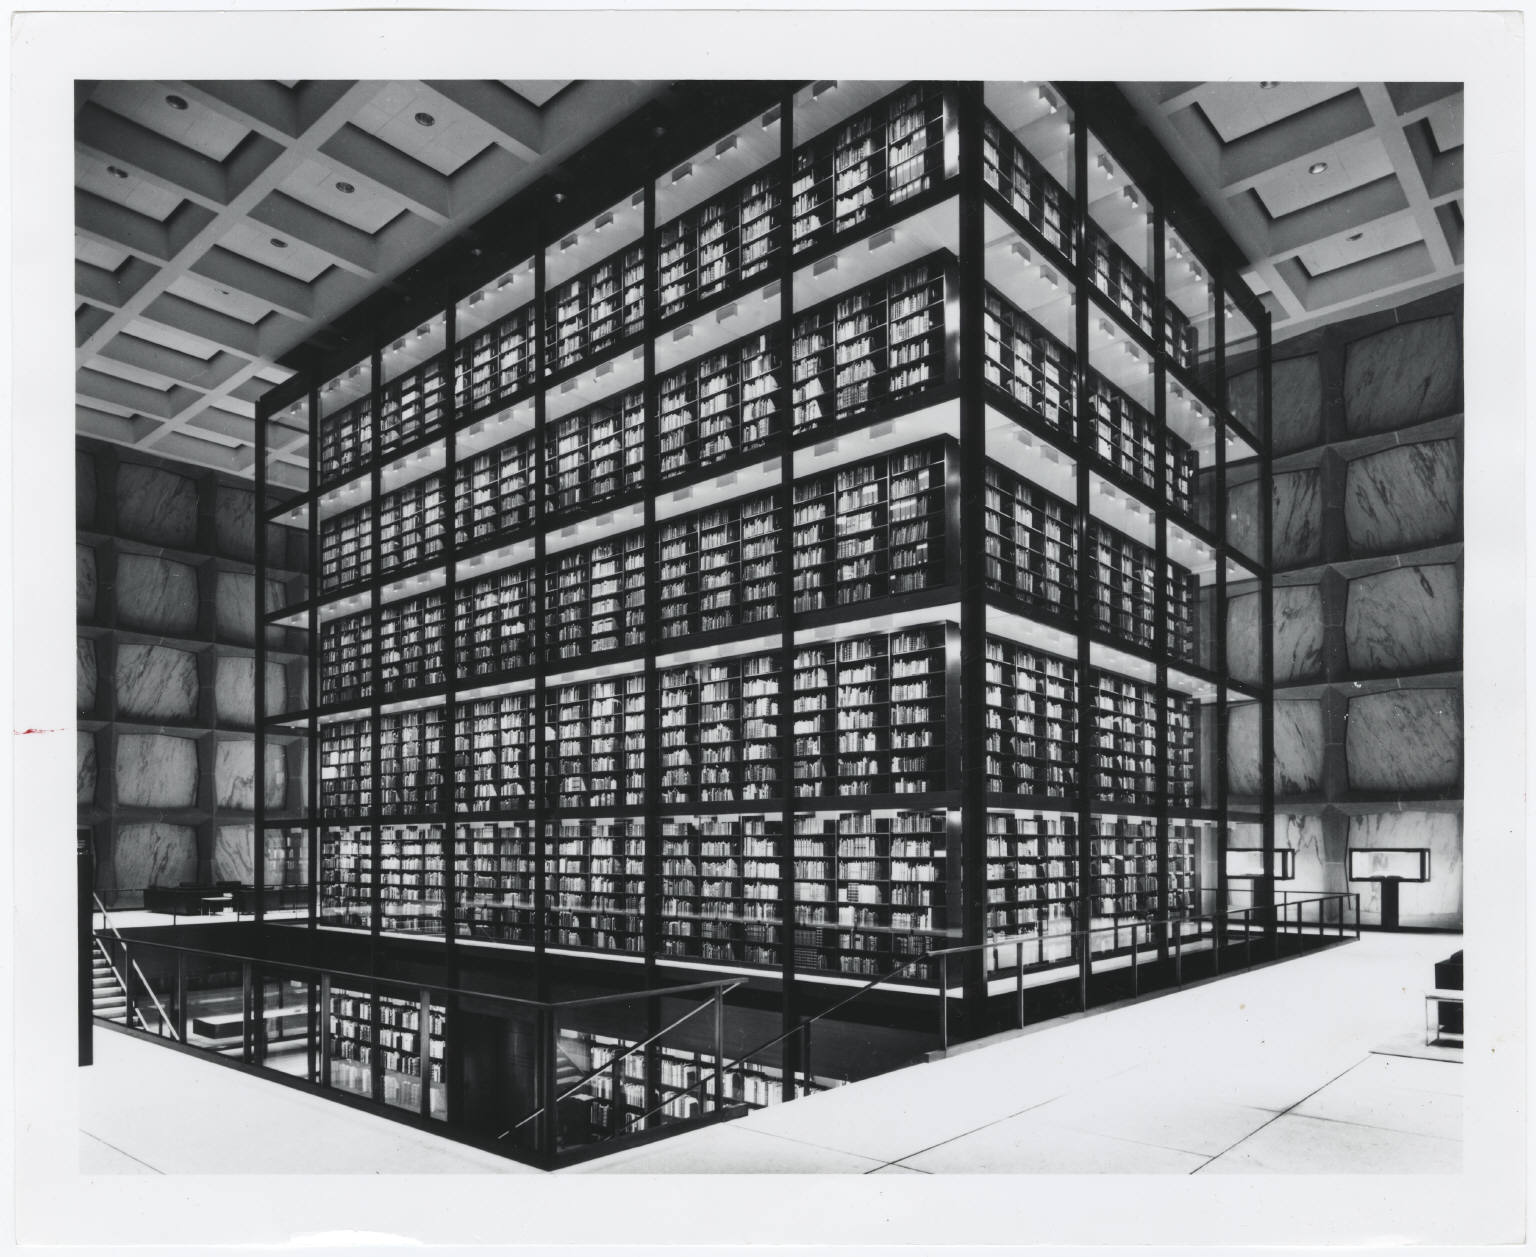 Architecture book. Yale University библиотека. Библиотека Луи Нюсера, Франция. Библиотека Бейнеке. Beinecke rare book & Manuscript Library.